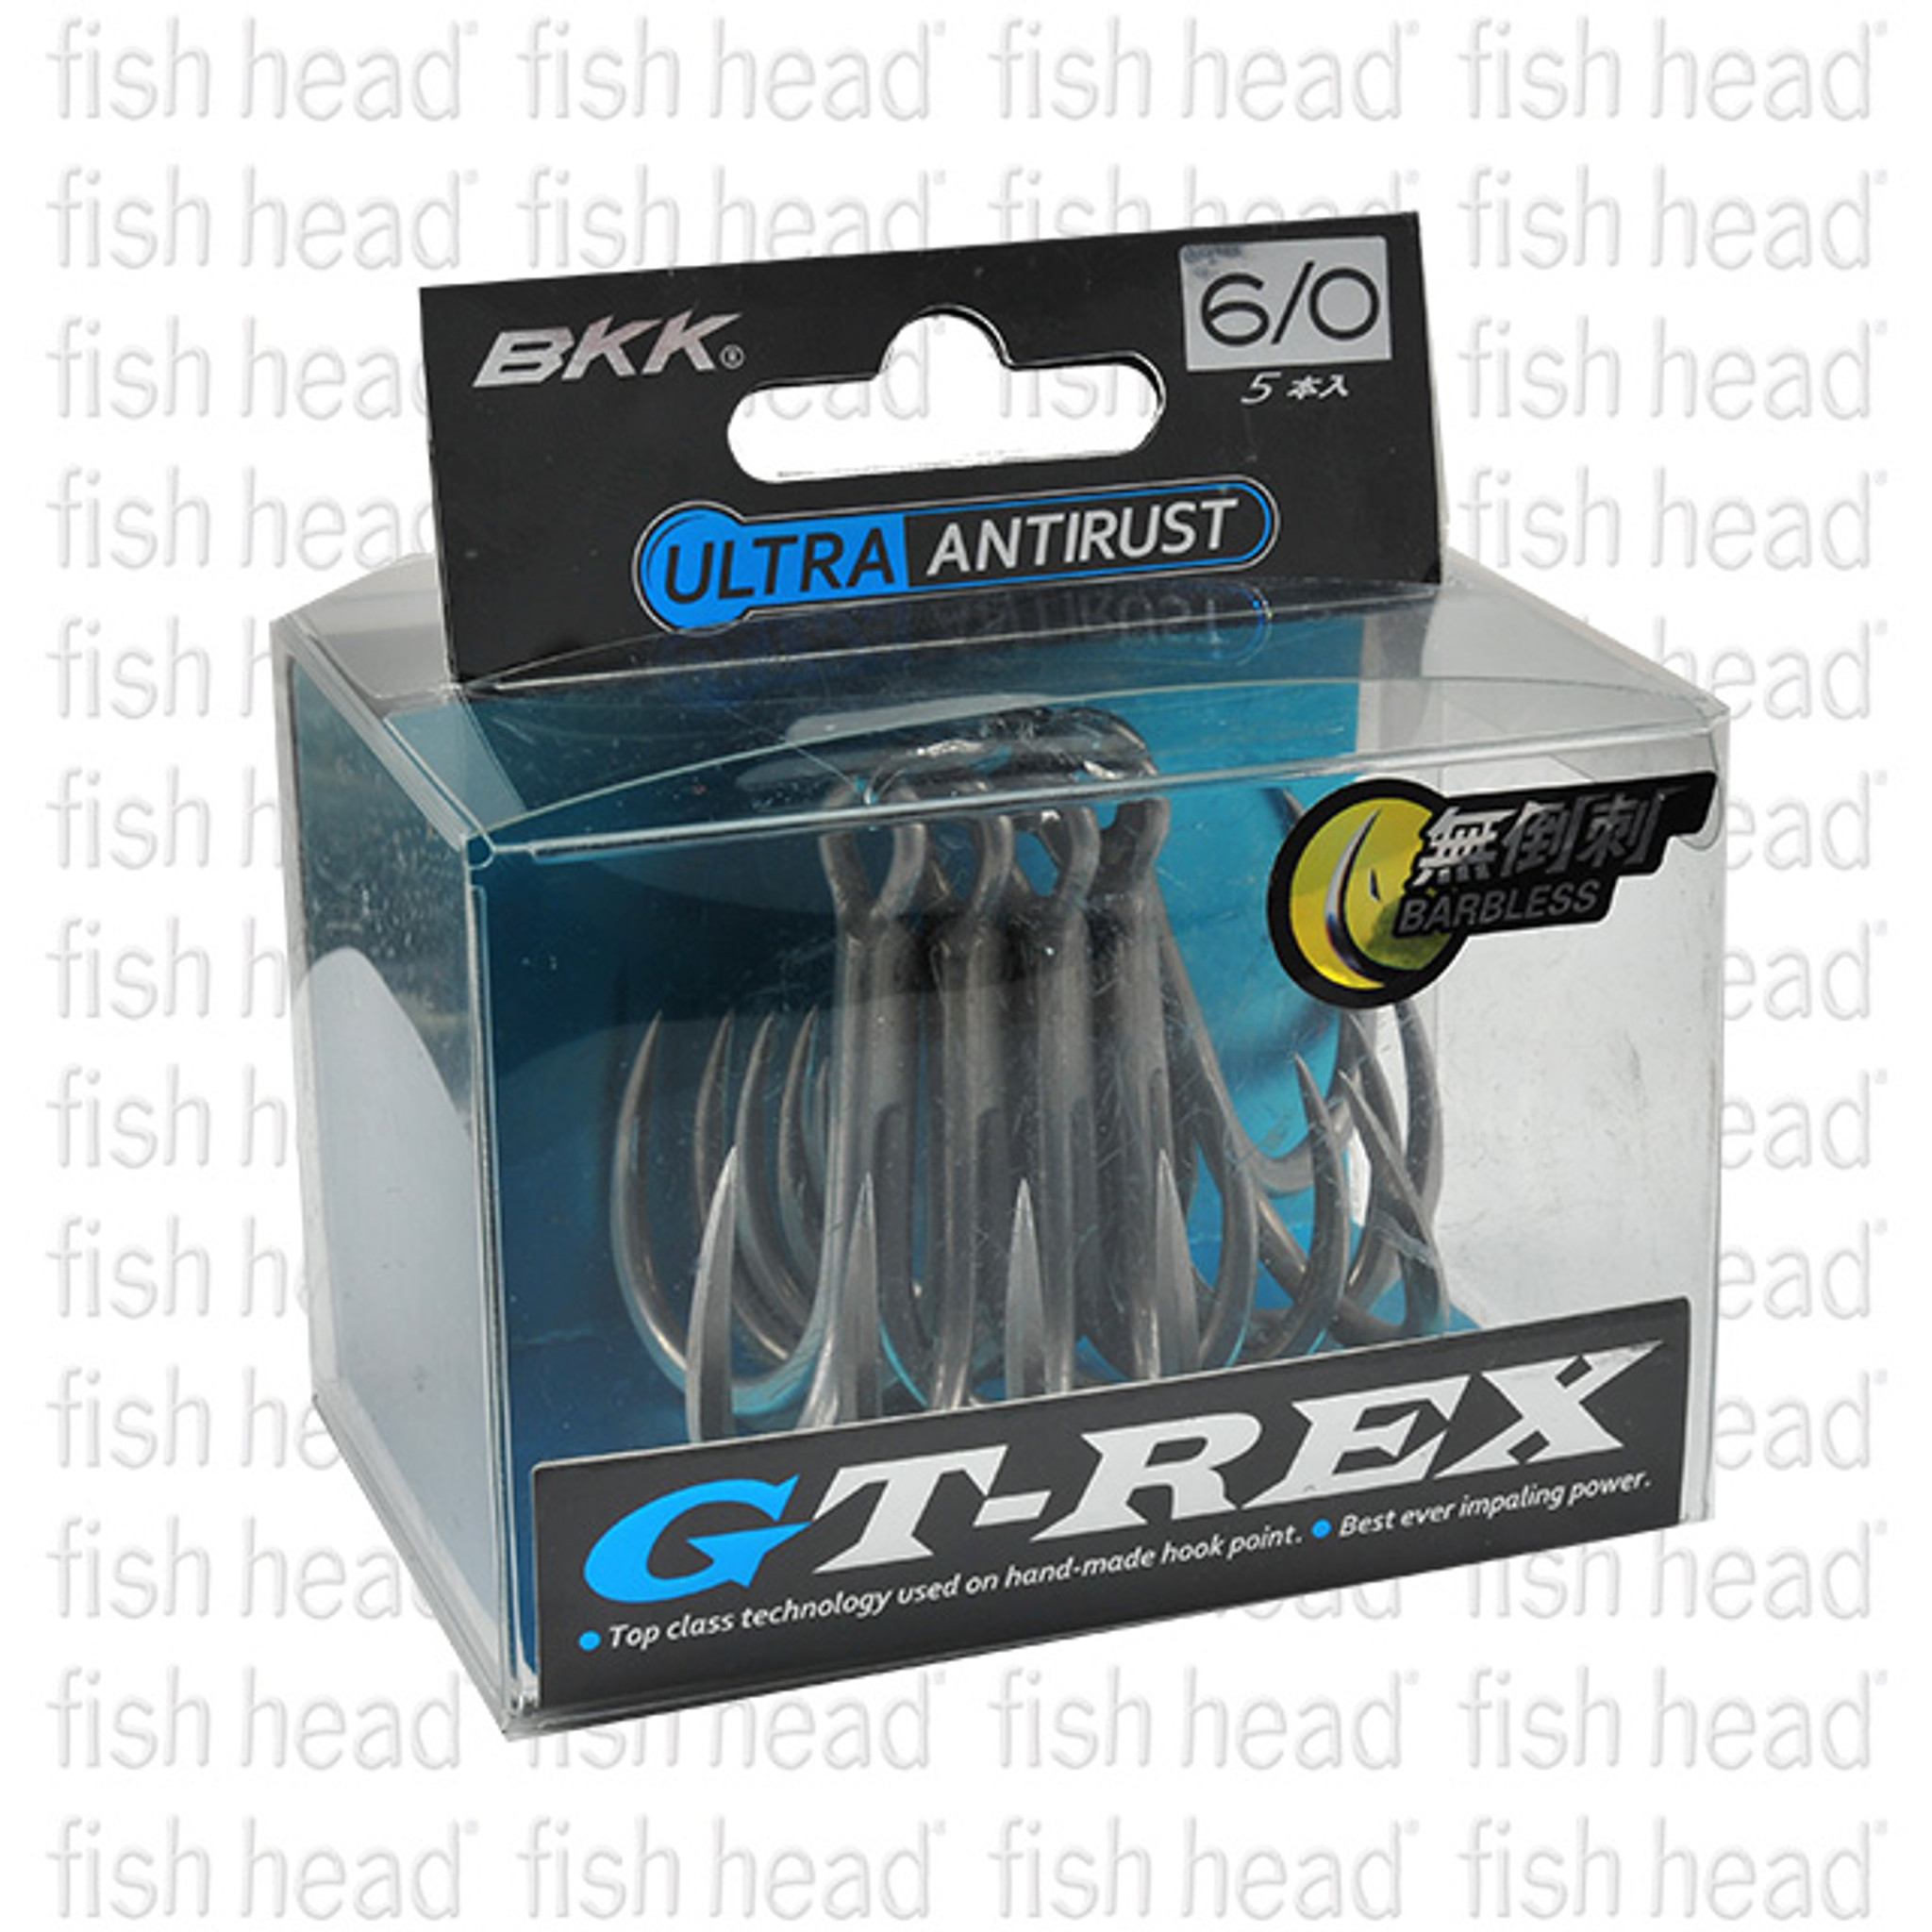 BKK GT-REX Barbless Treble Hooks - Fish Head